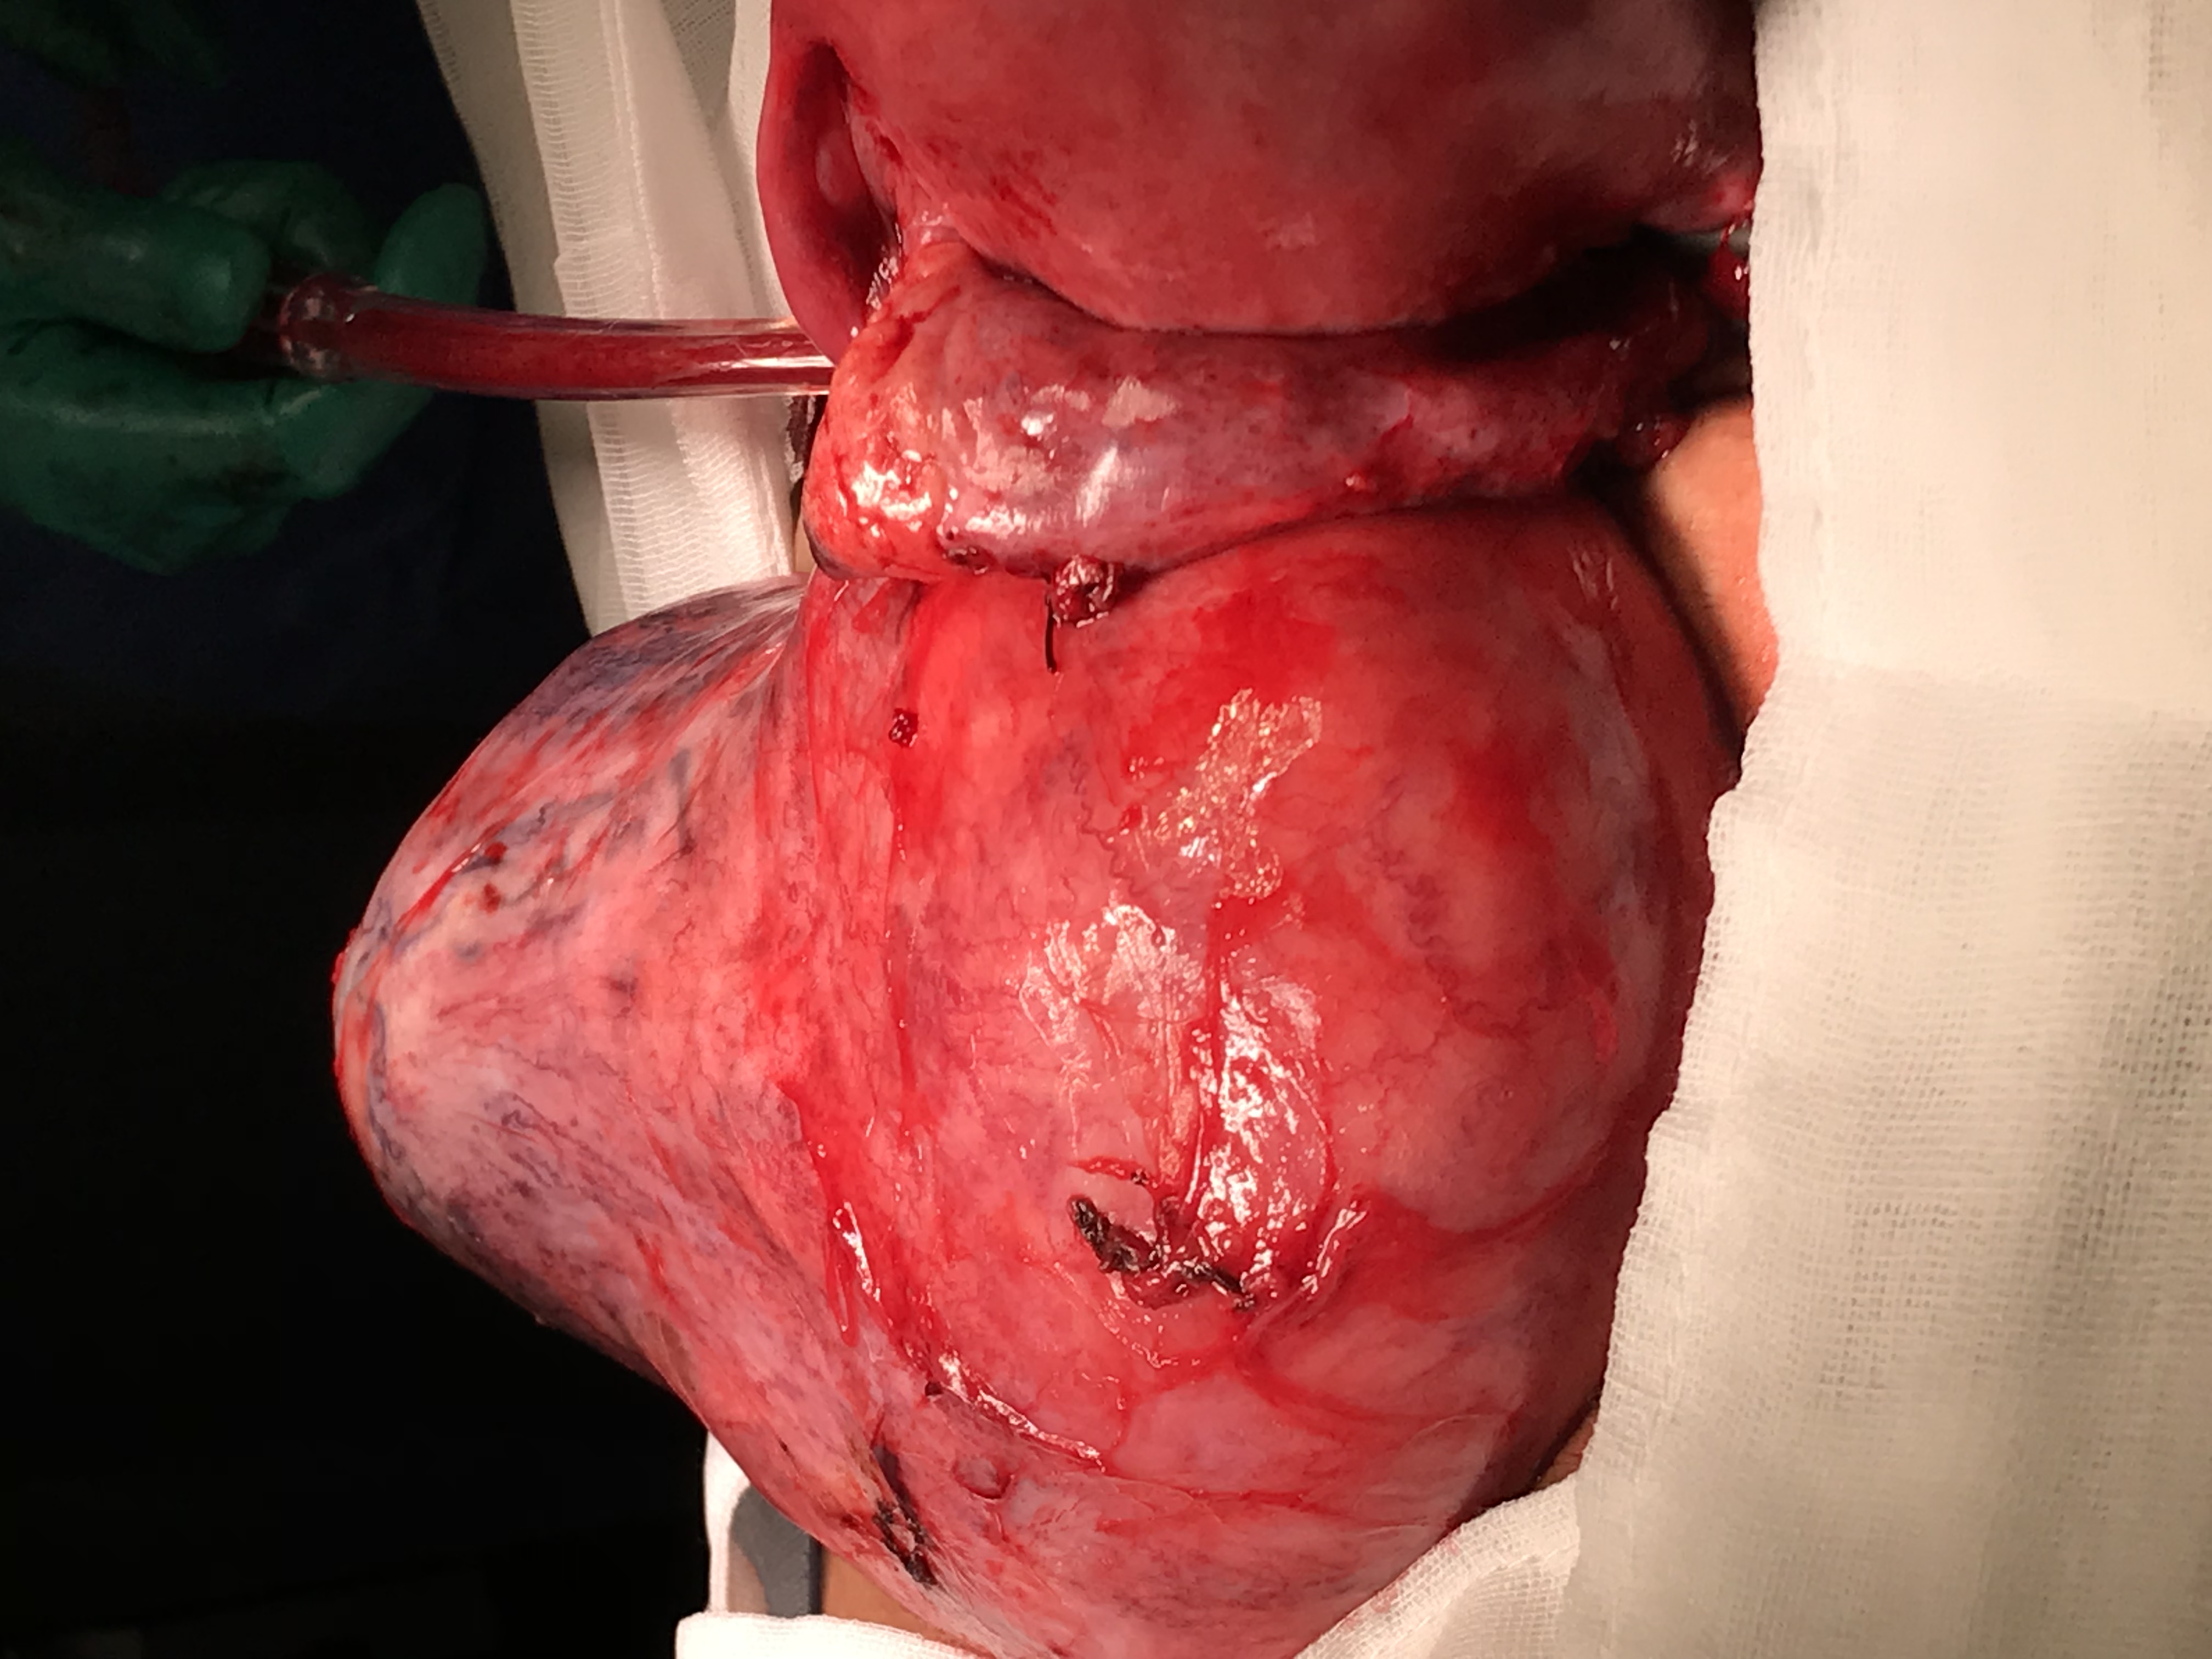 Dr Serag Youssif Fibroid Very Large Herniating Through Pelvic Floor1